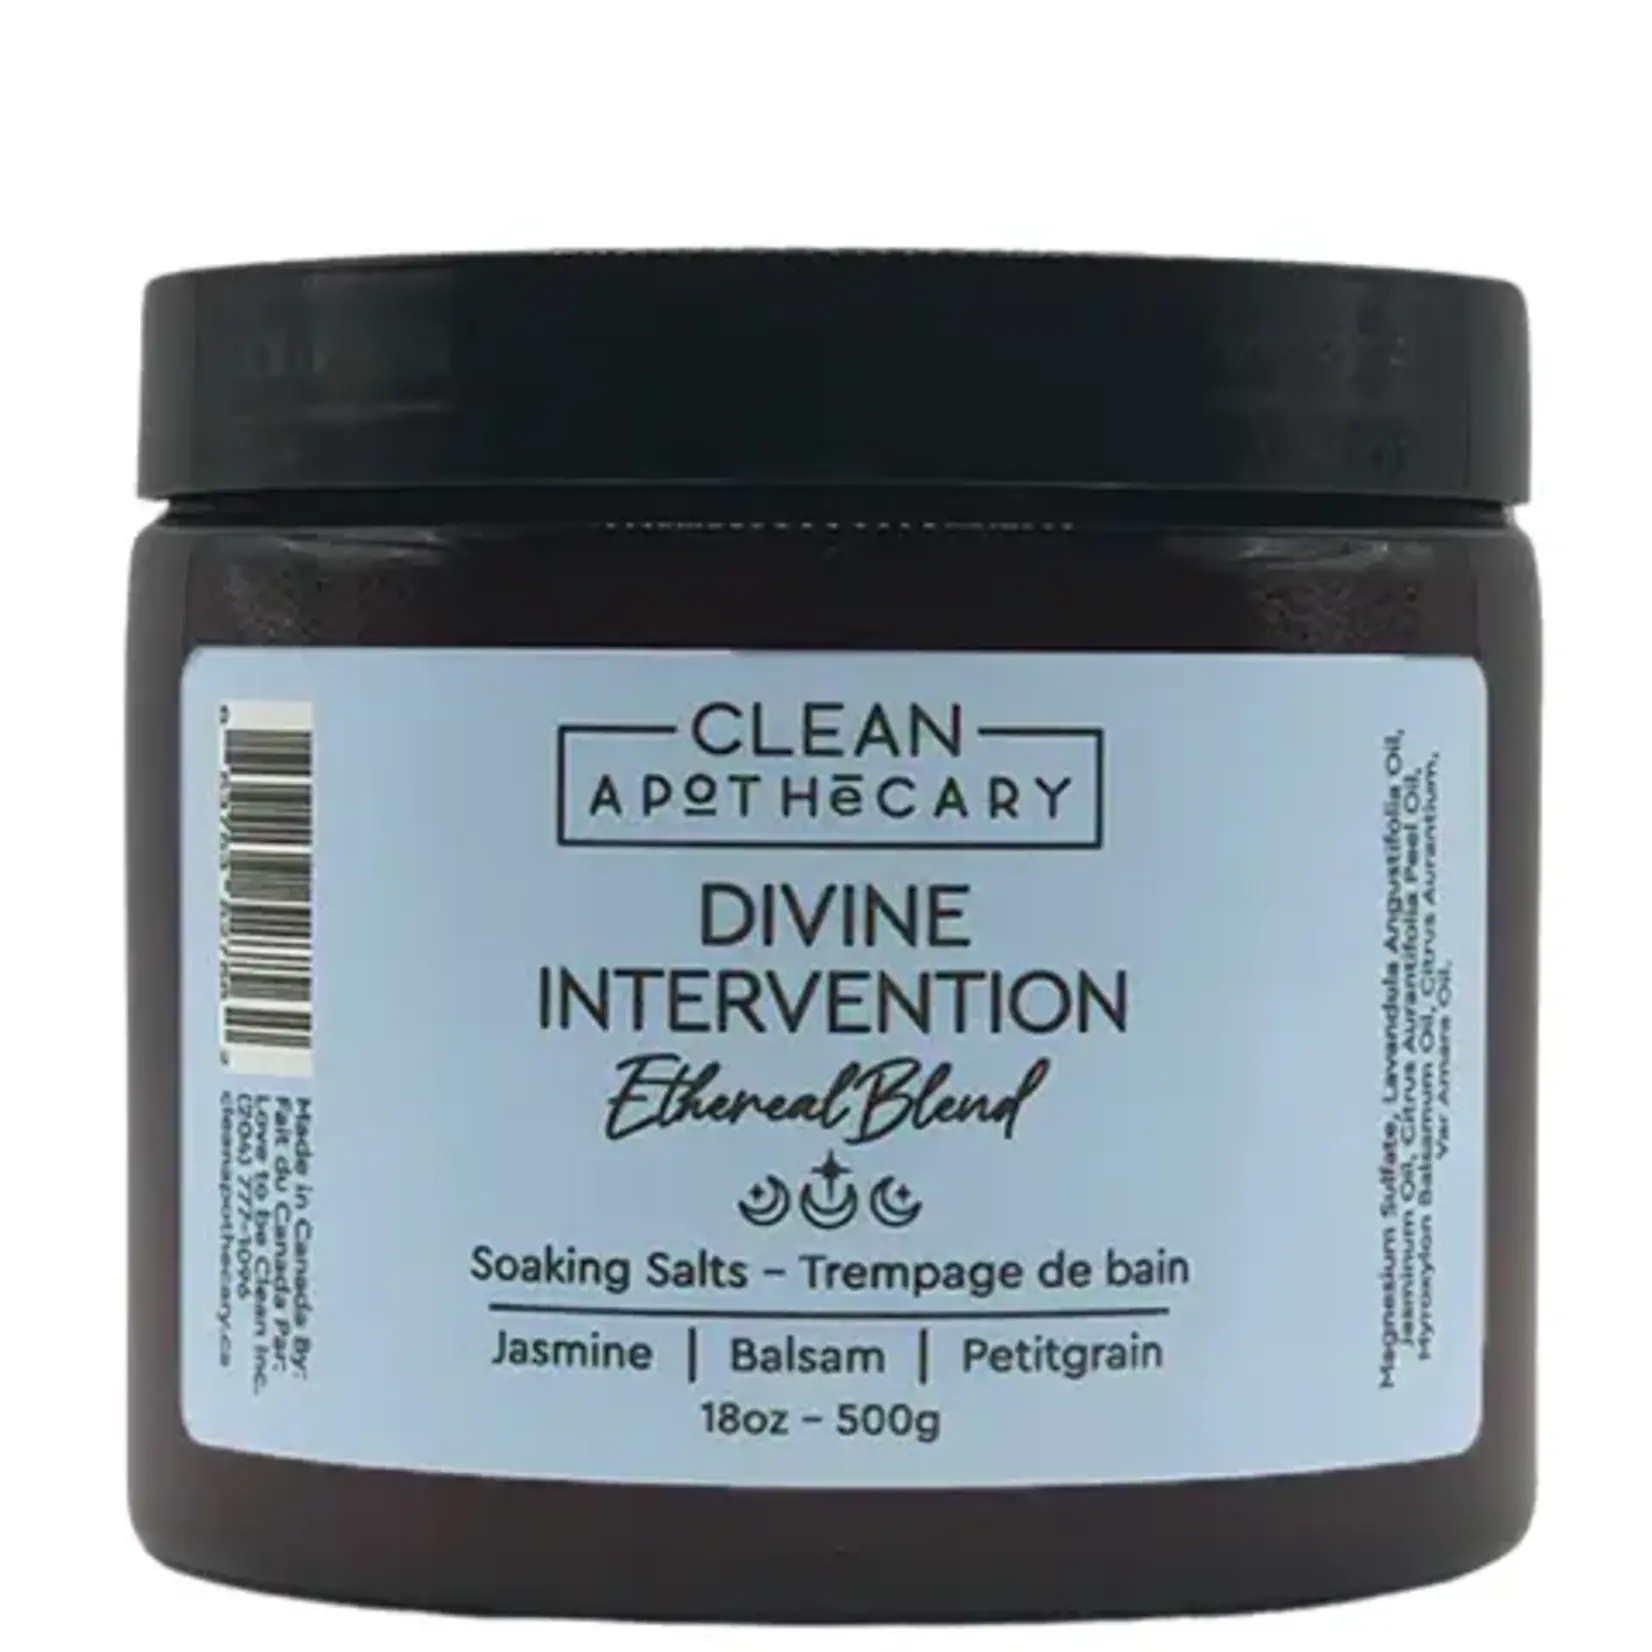 Clean Apothecary Divine Intervention Bath Salts - 500g